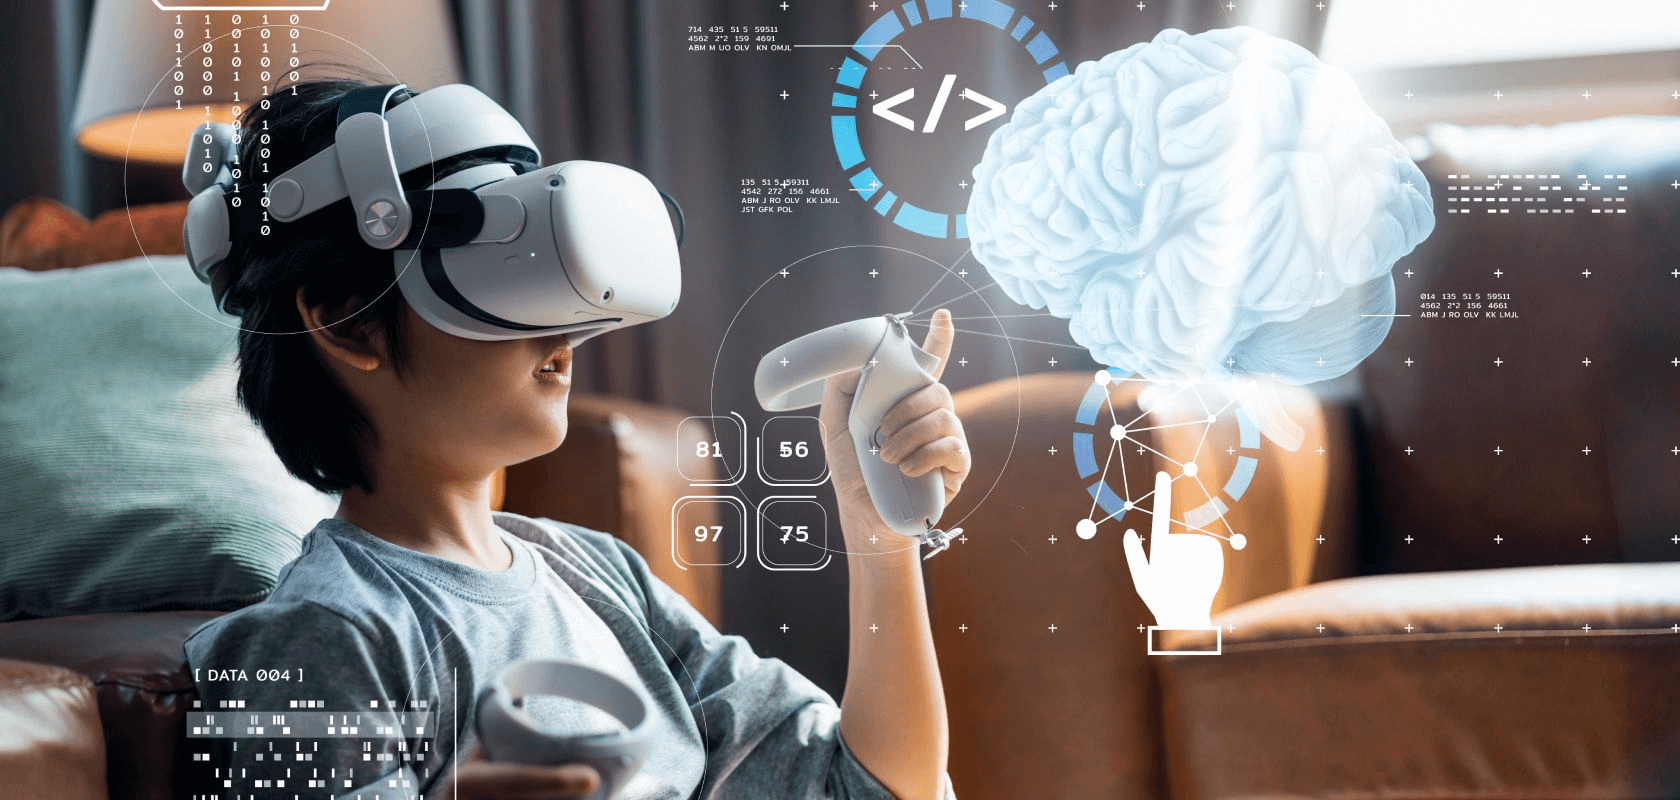 VR虚拟仿真实验教学平台_ 技术与应用探讨